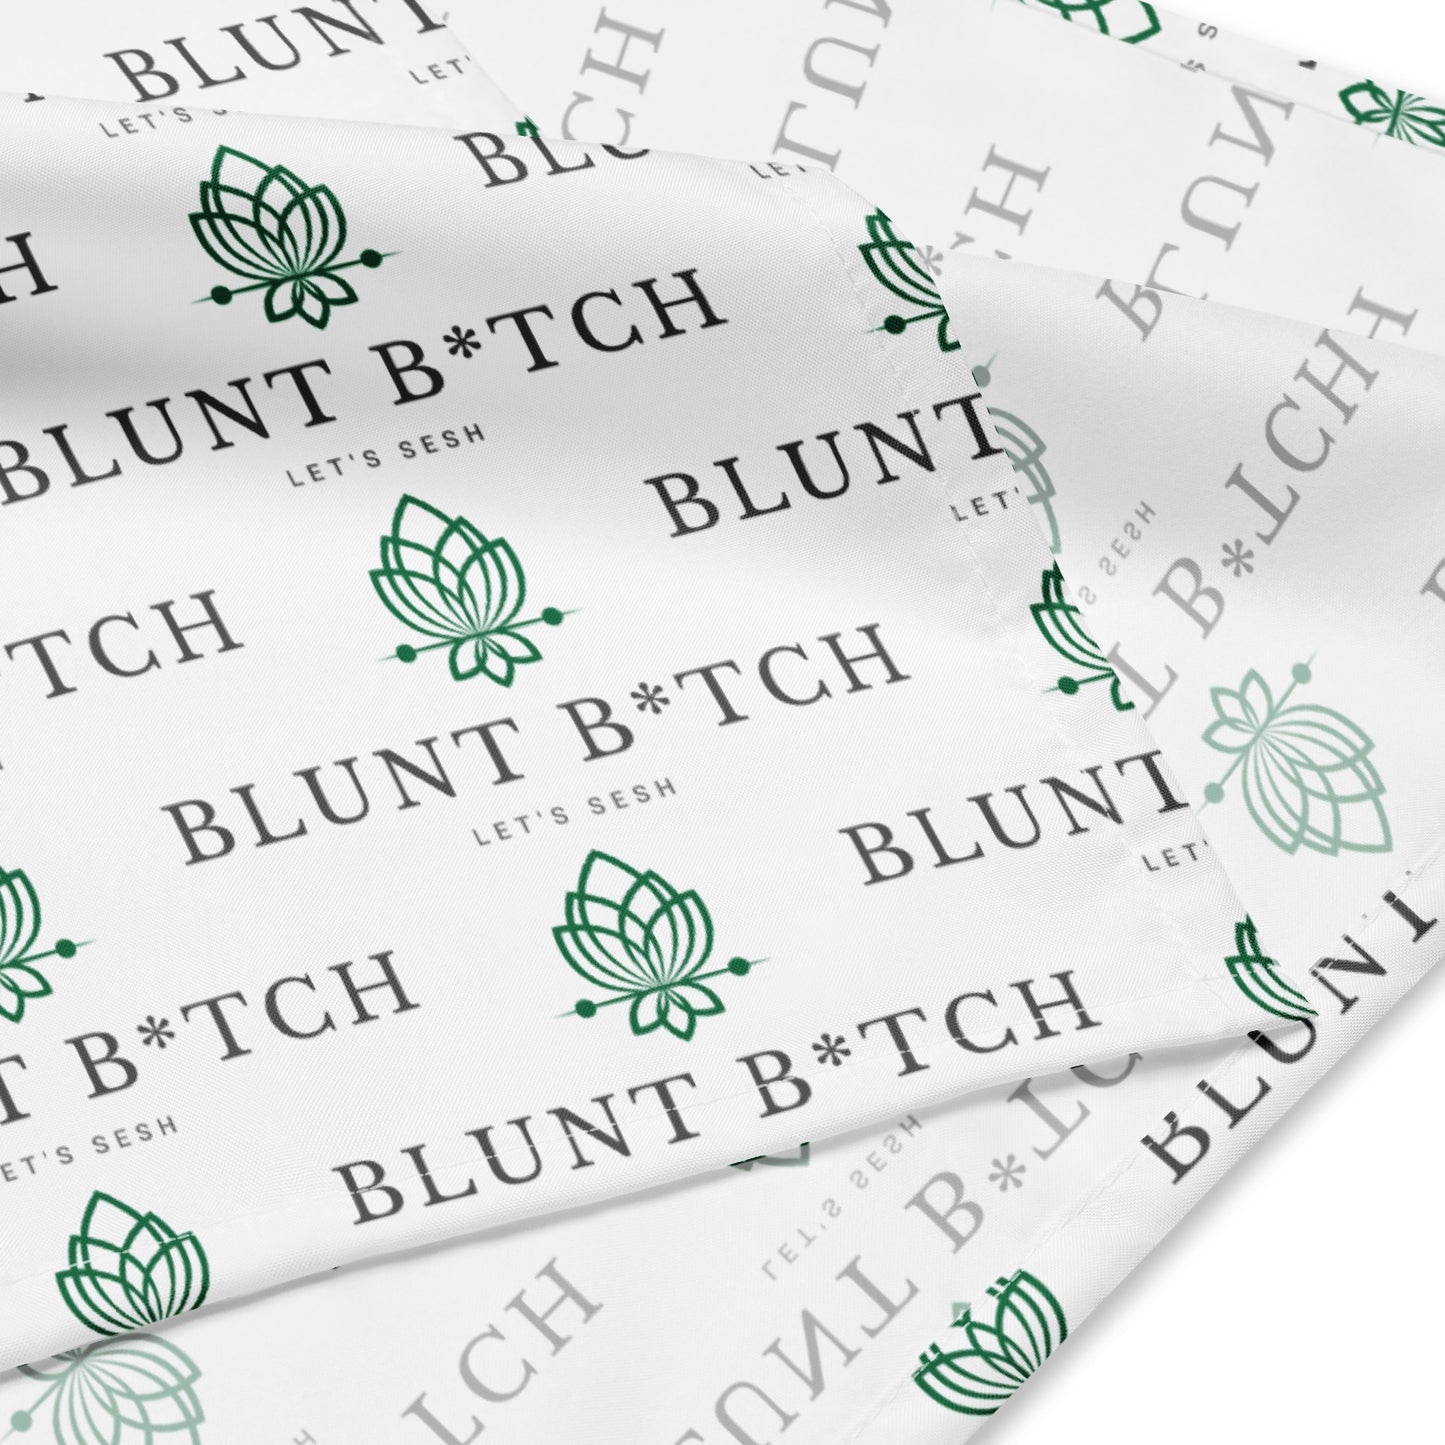 Blunt B*tch All-over print bandana!